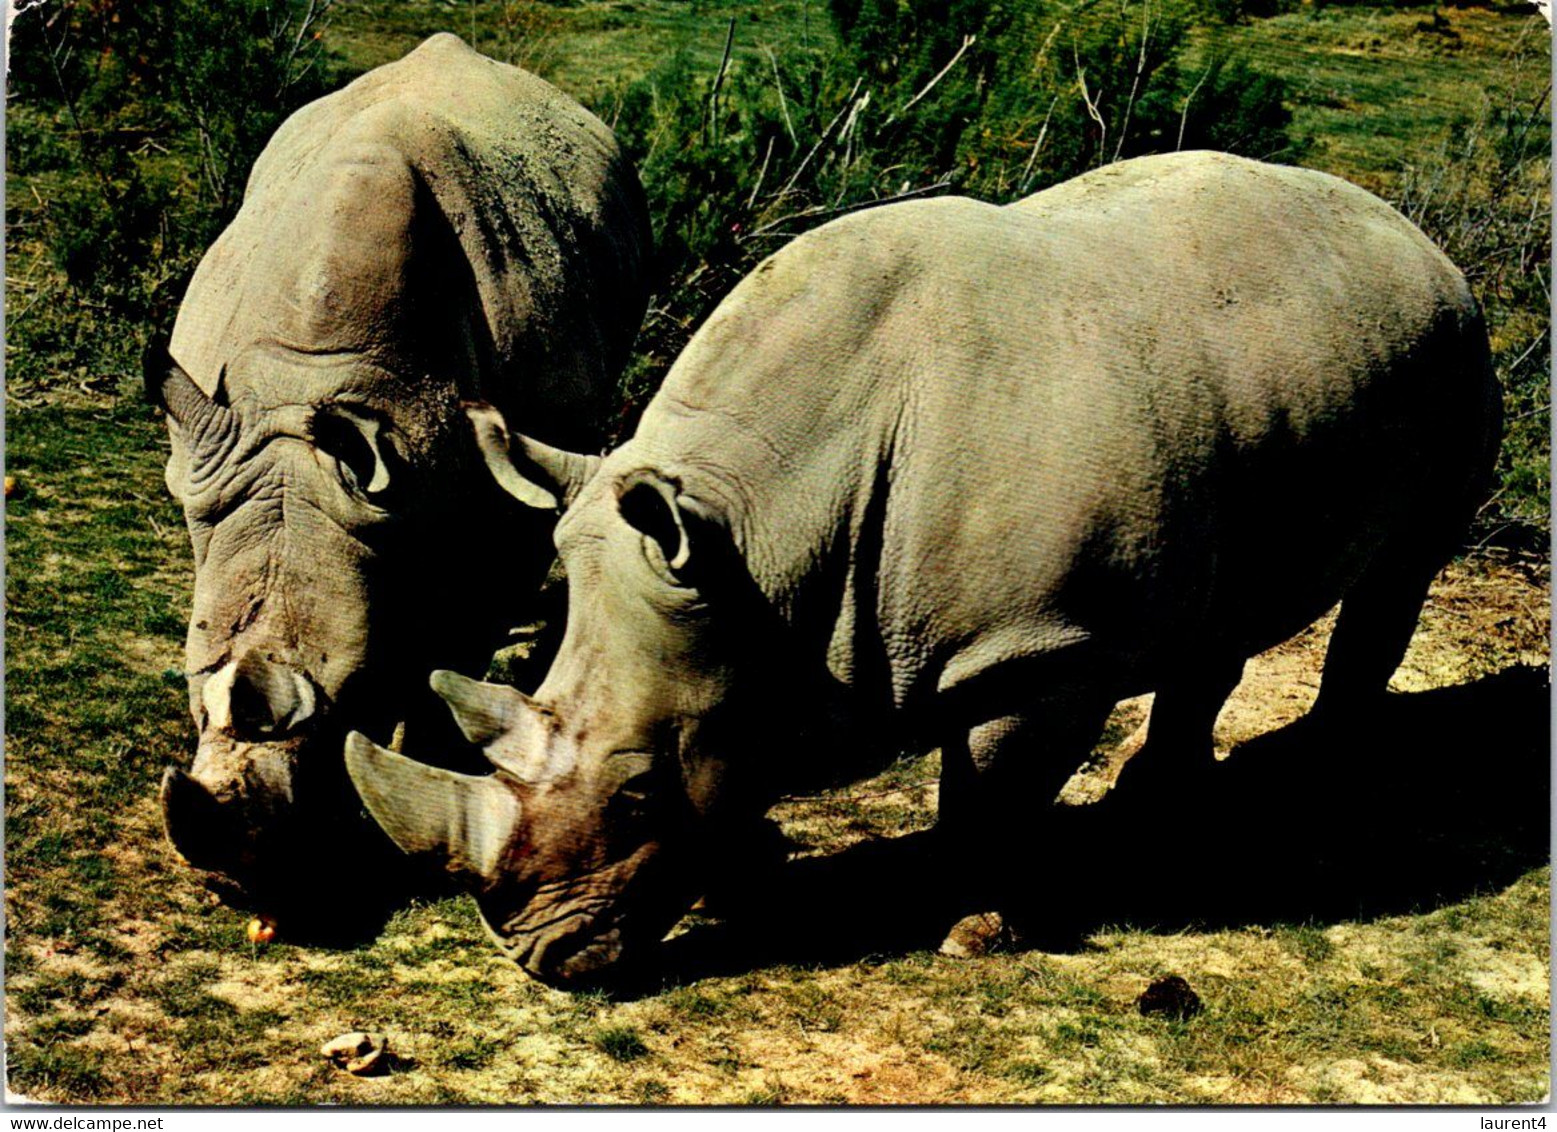 (2 M 10) (M+S) France - Sigean Nature Reserve (ZOO) Rhinocéros - Rhinoceros